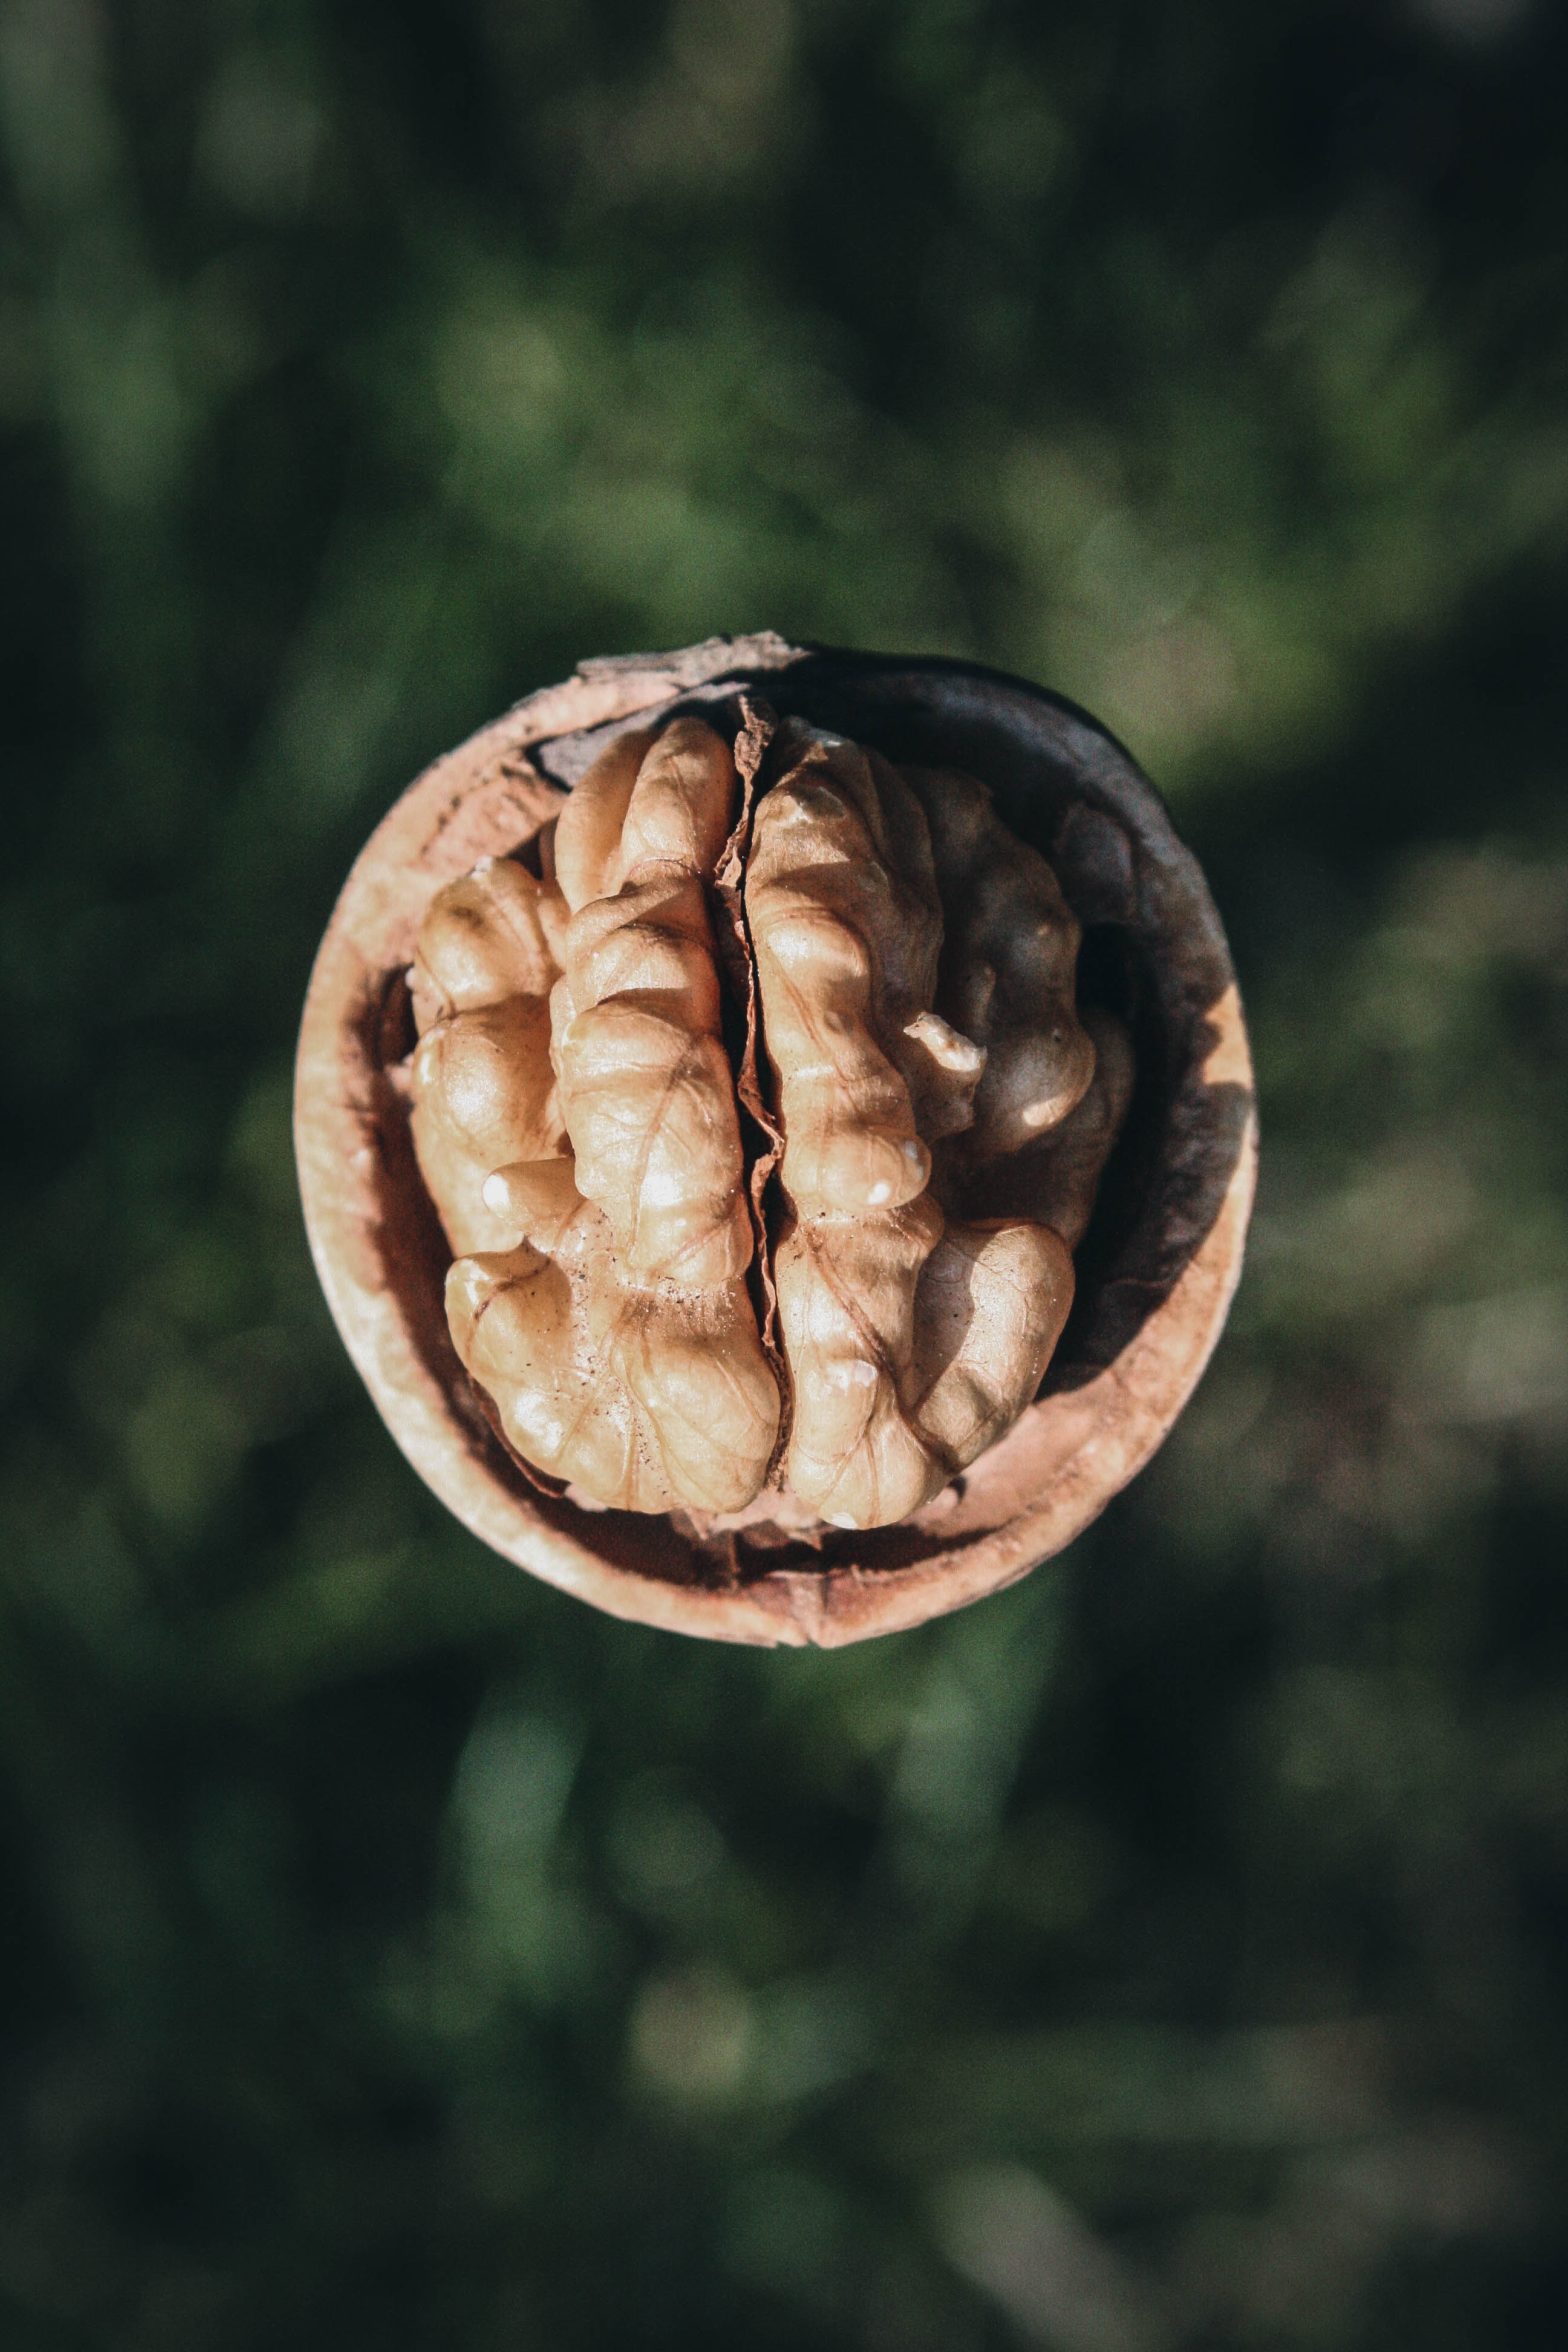 A walnut in its shell that looks like a healthy brain.